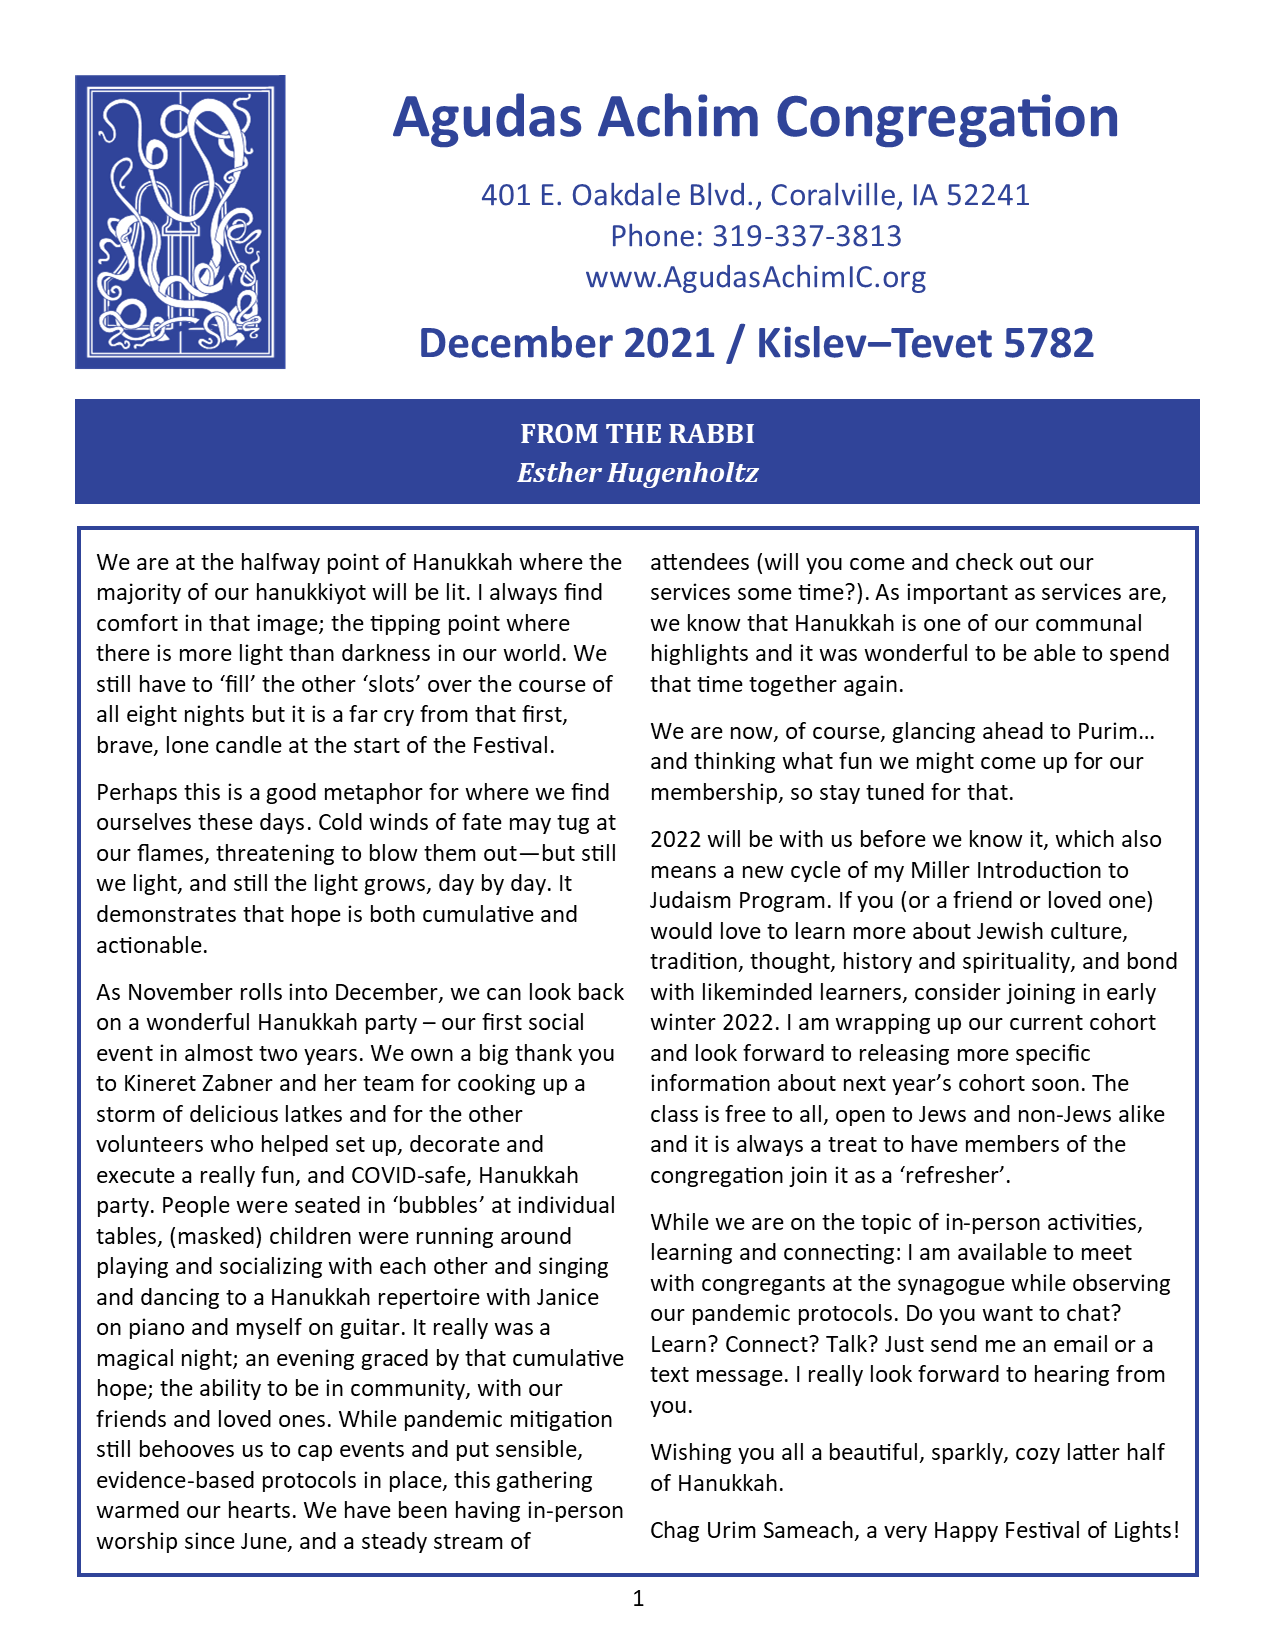 December 2021 Bulletin Cover